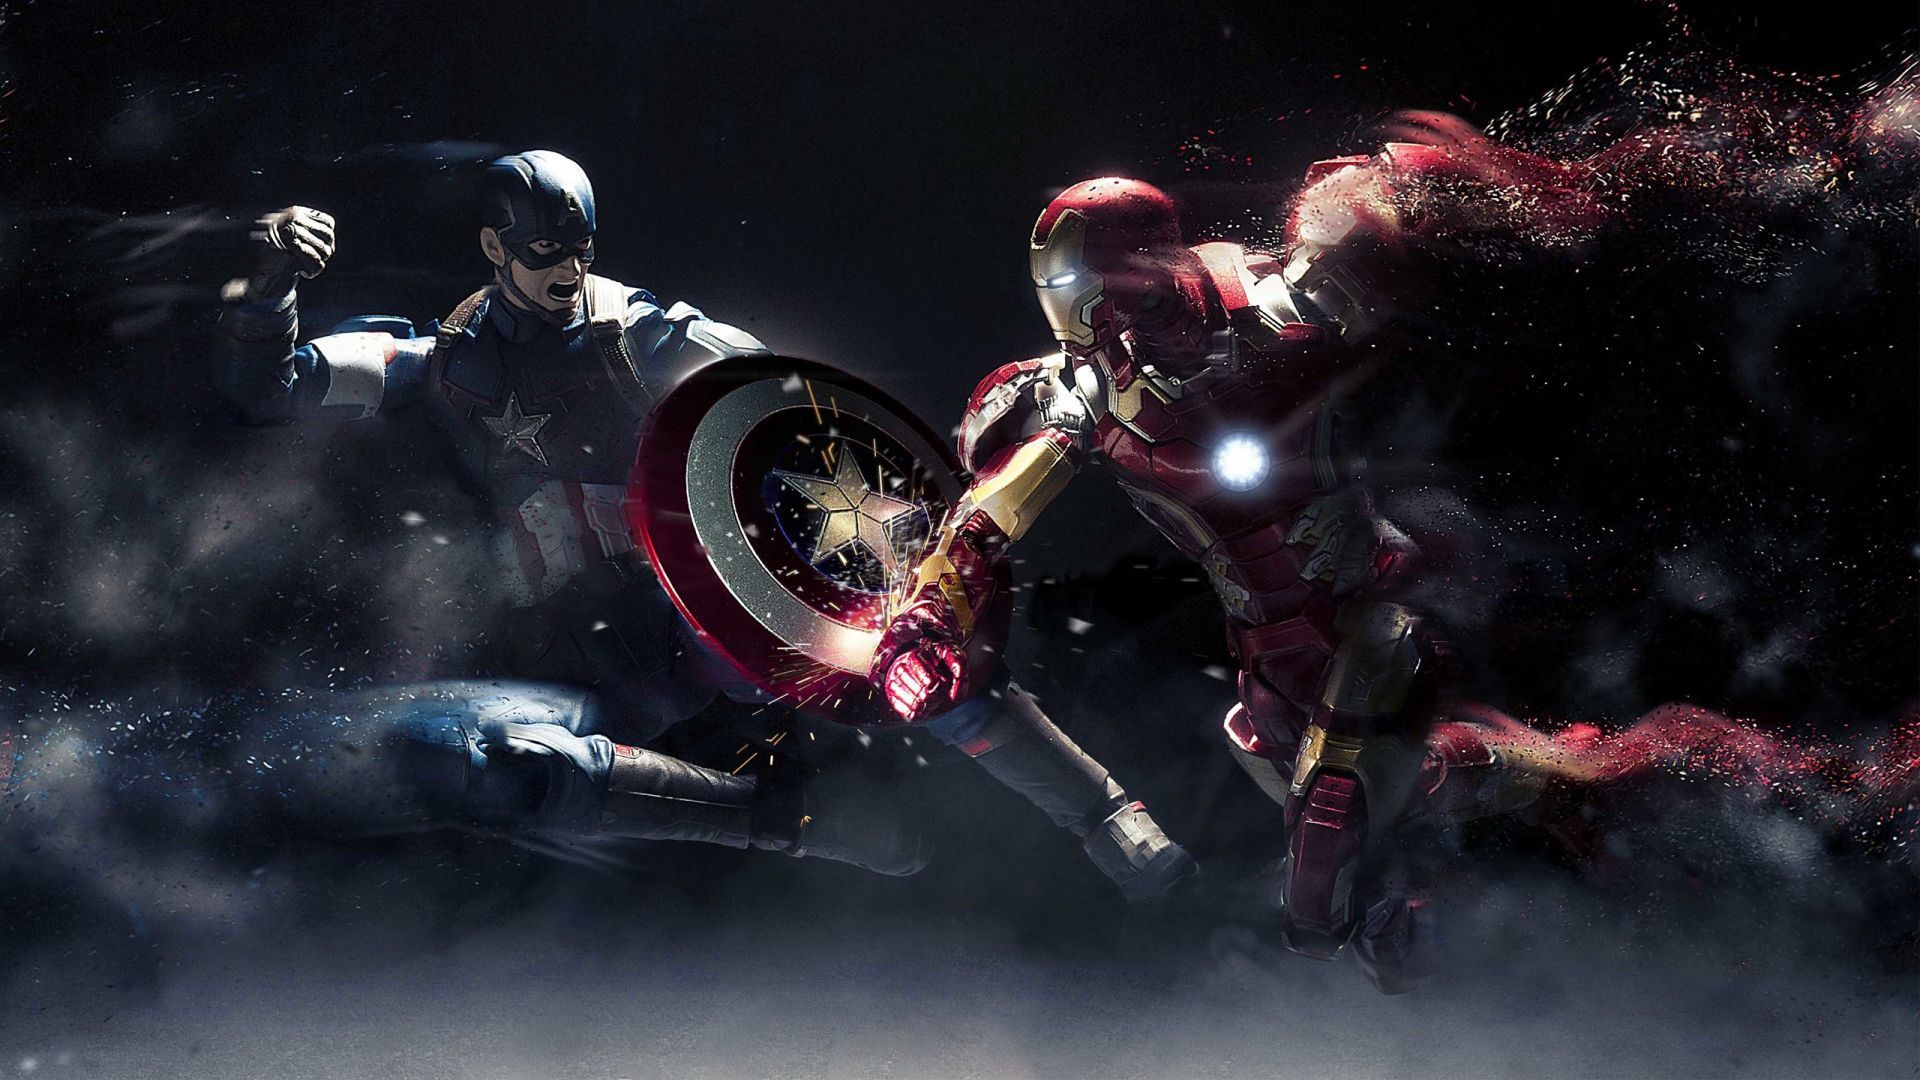 Captain America Vs Iron Man wallpaper in 1920x1080 resolution